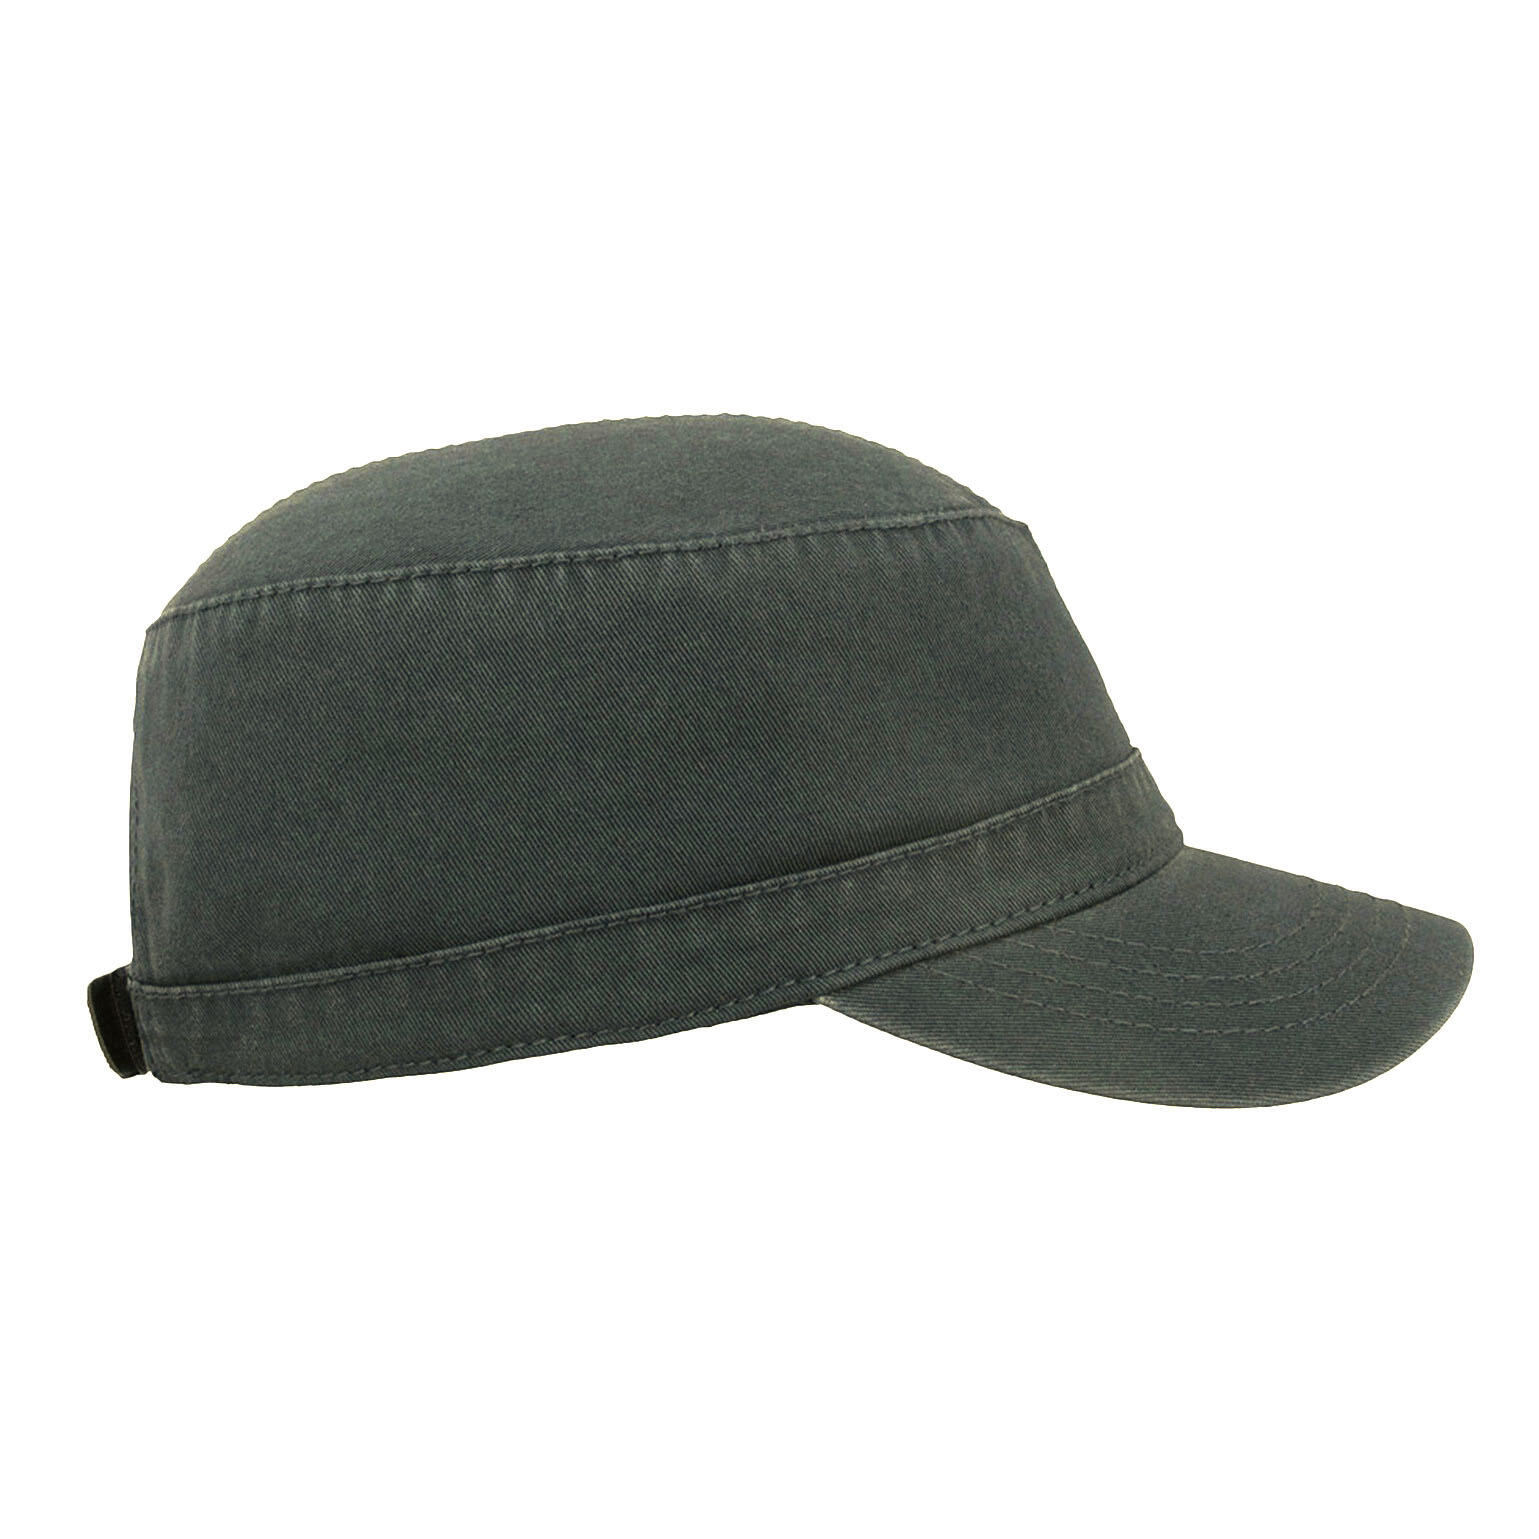 Chino Cotton Uniform Military Cap (Olive) 2/3